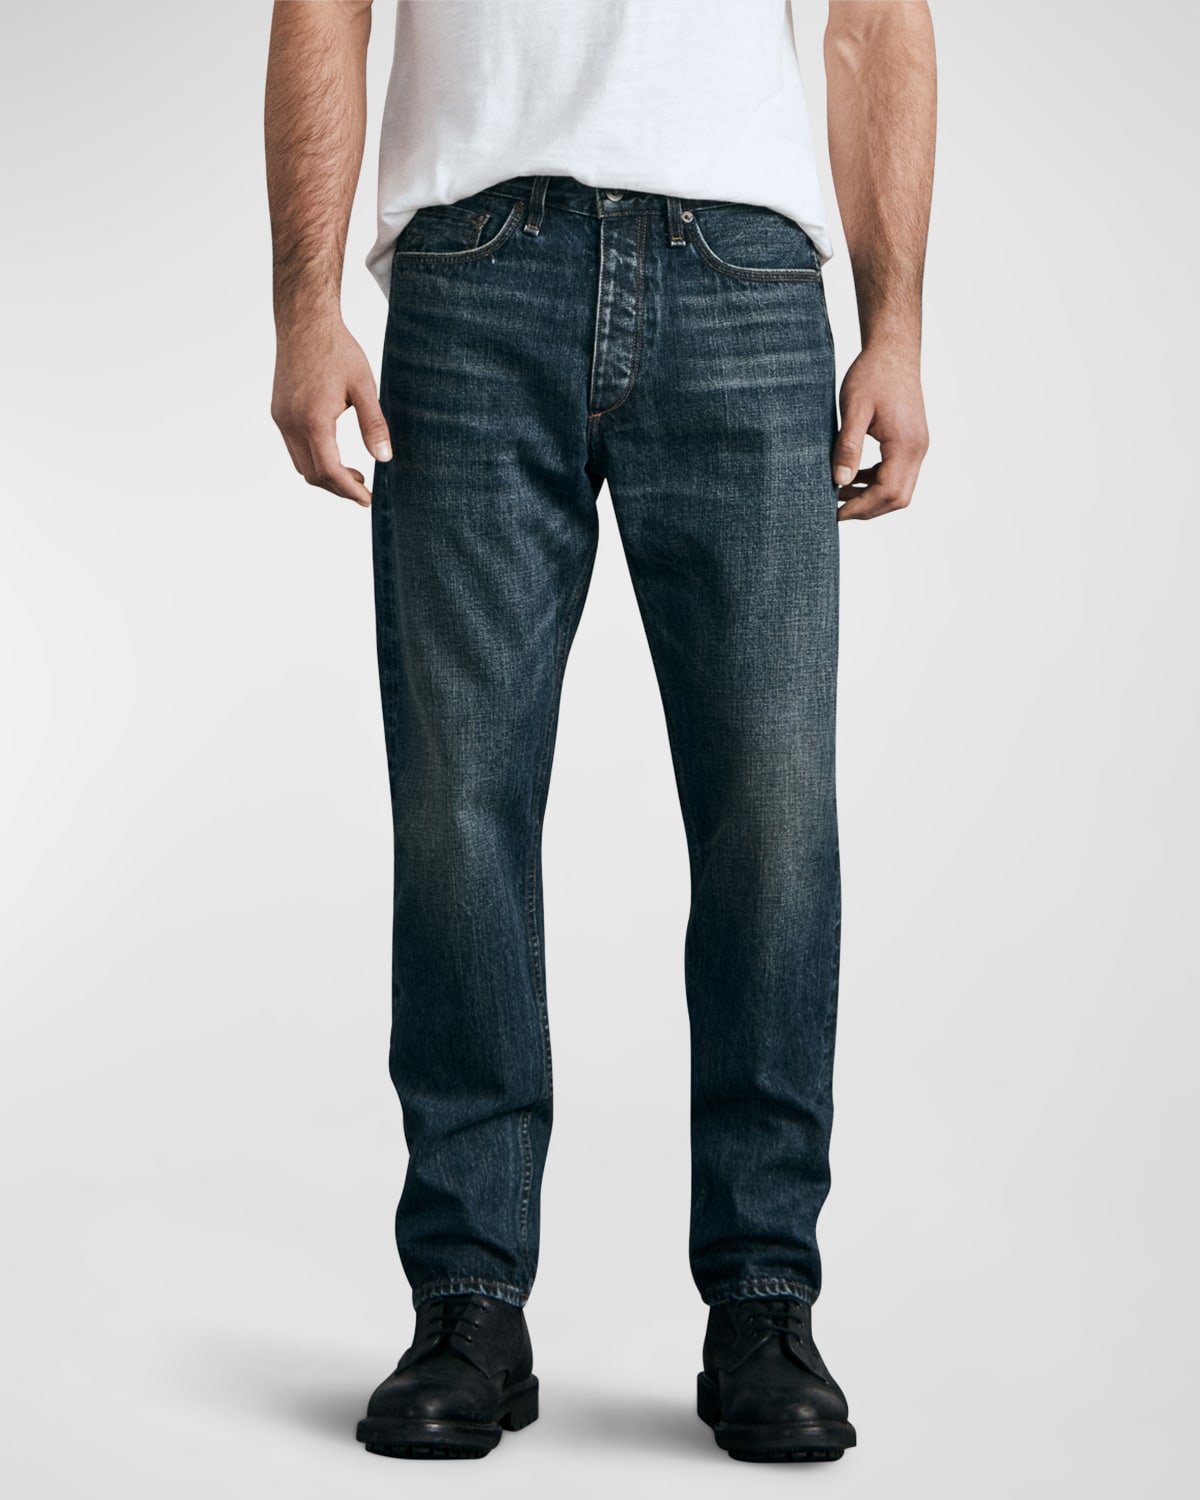 Men's Slim-Fit Archive Selvedge Jeans